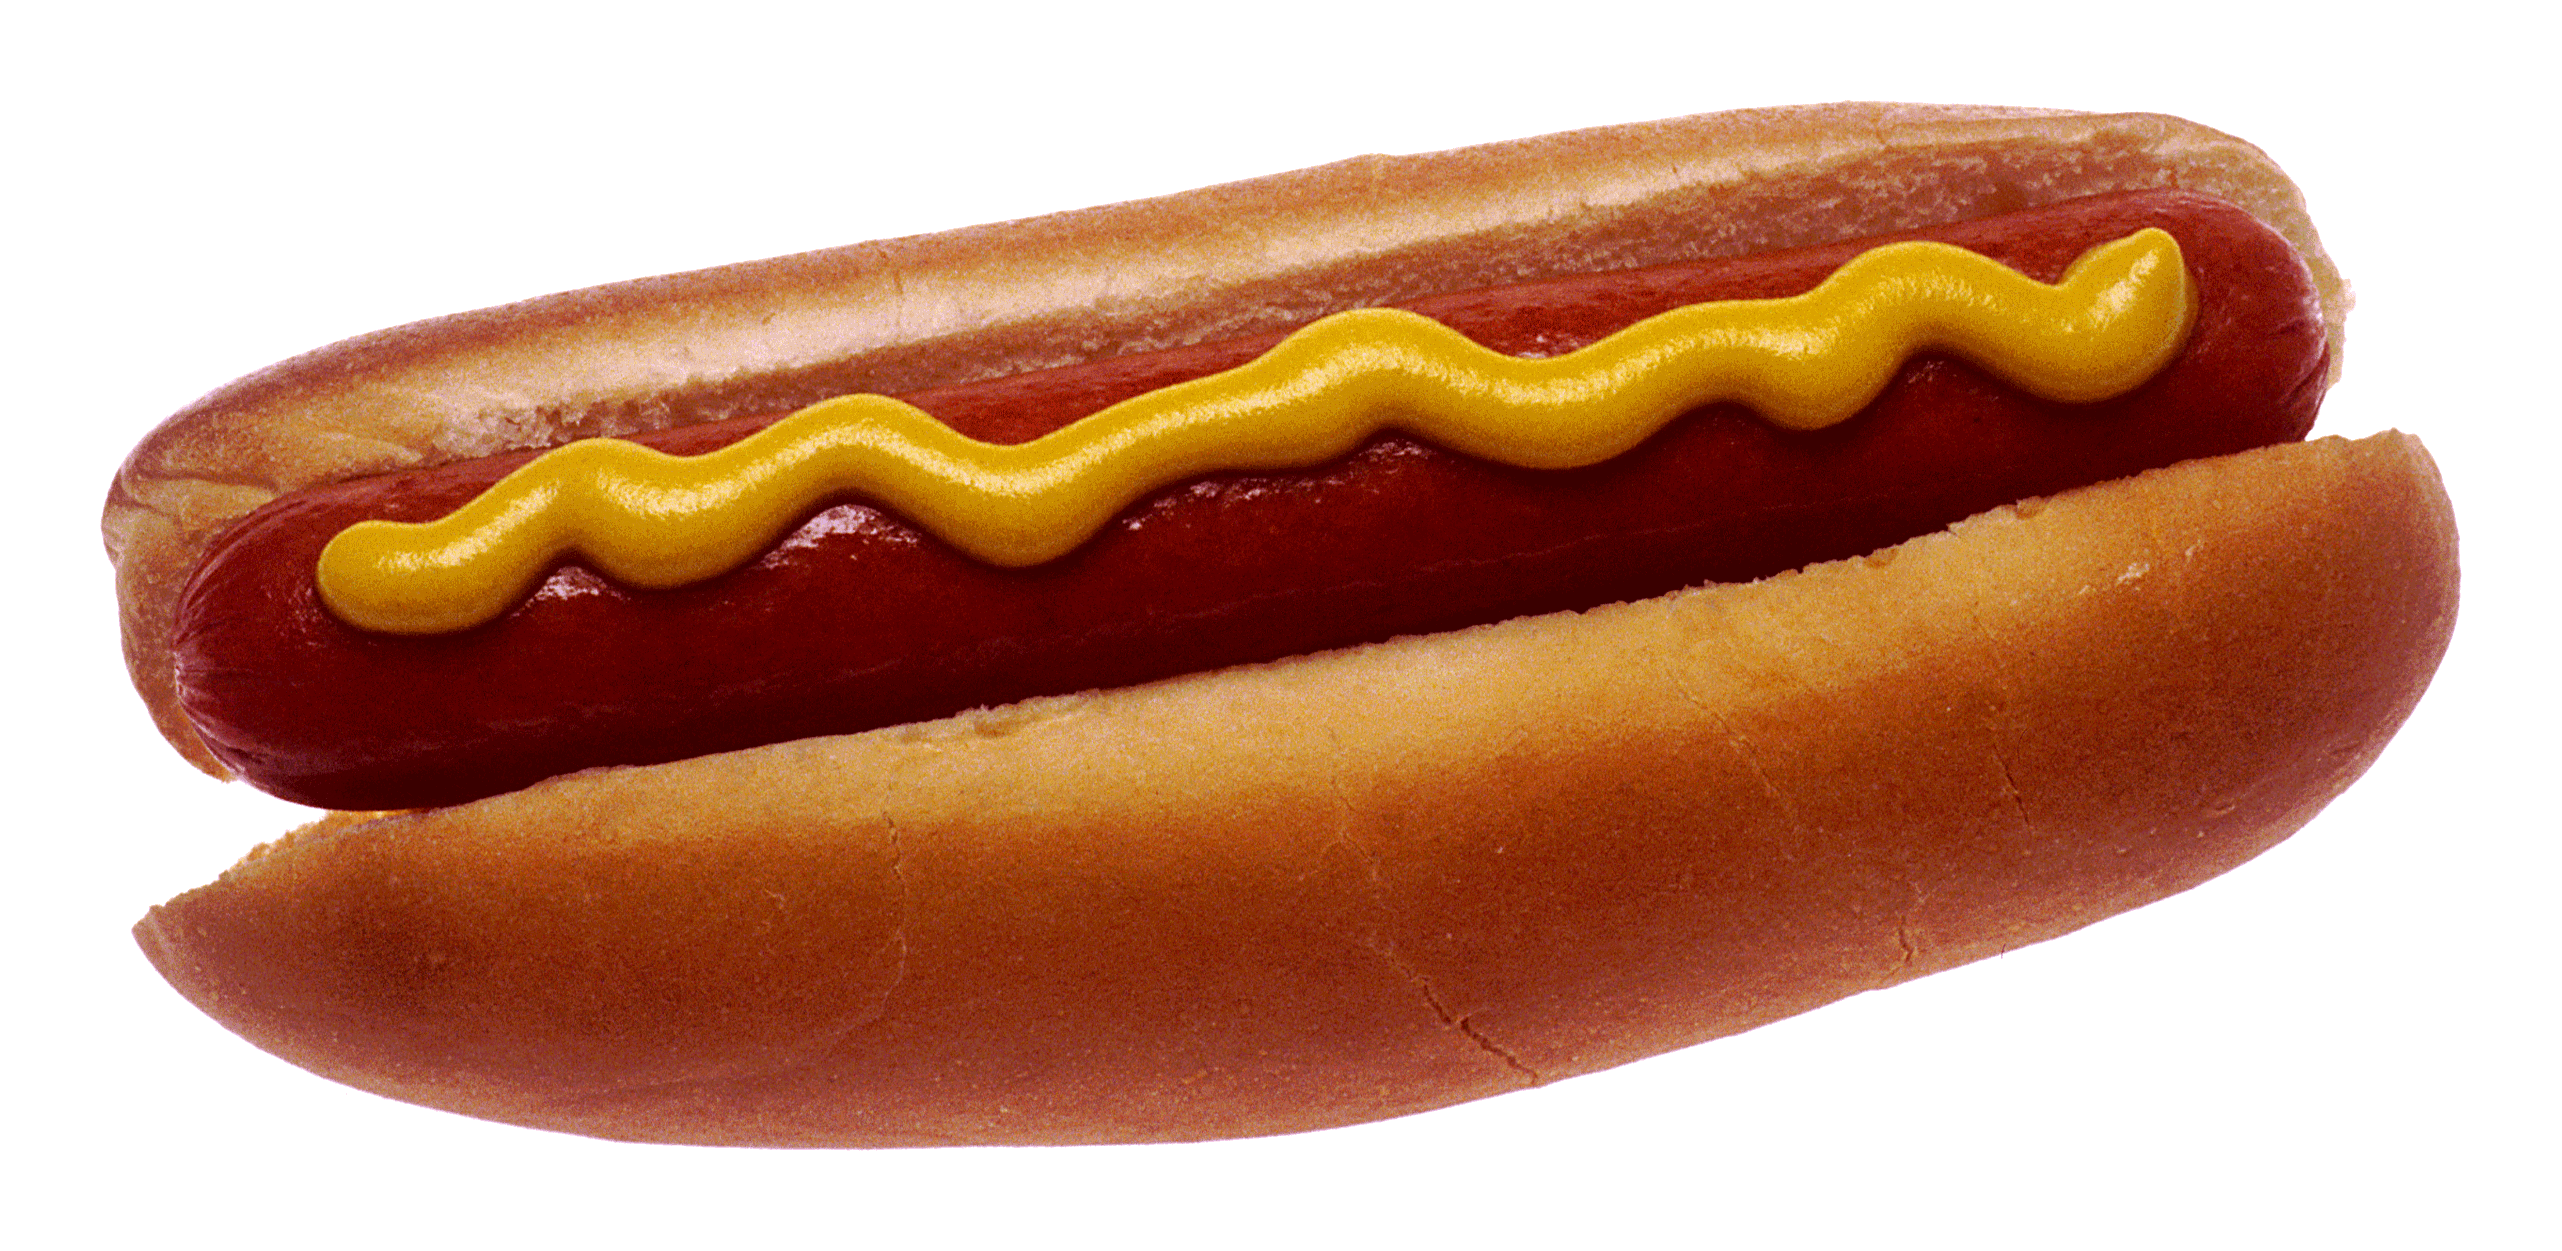 Picture Of Hotdog - KibrisPDR